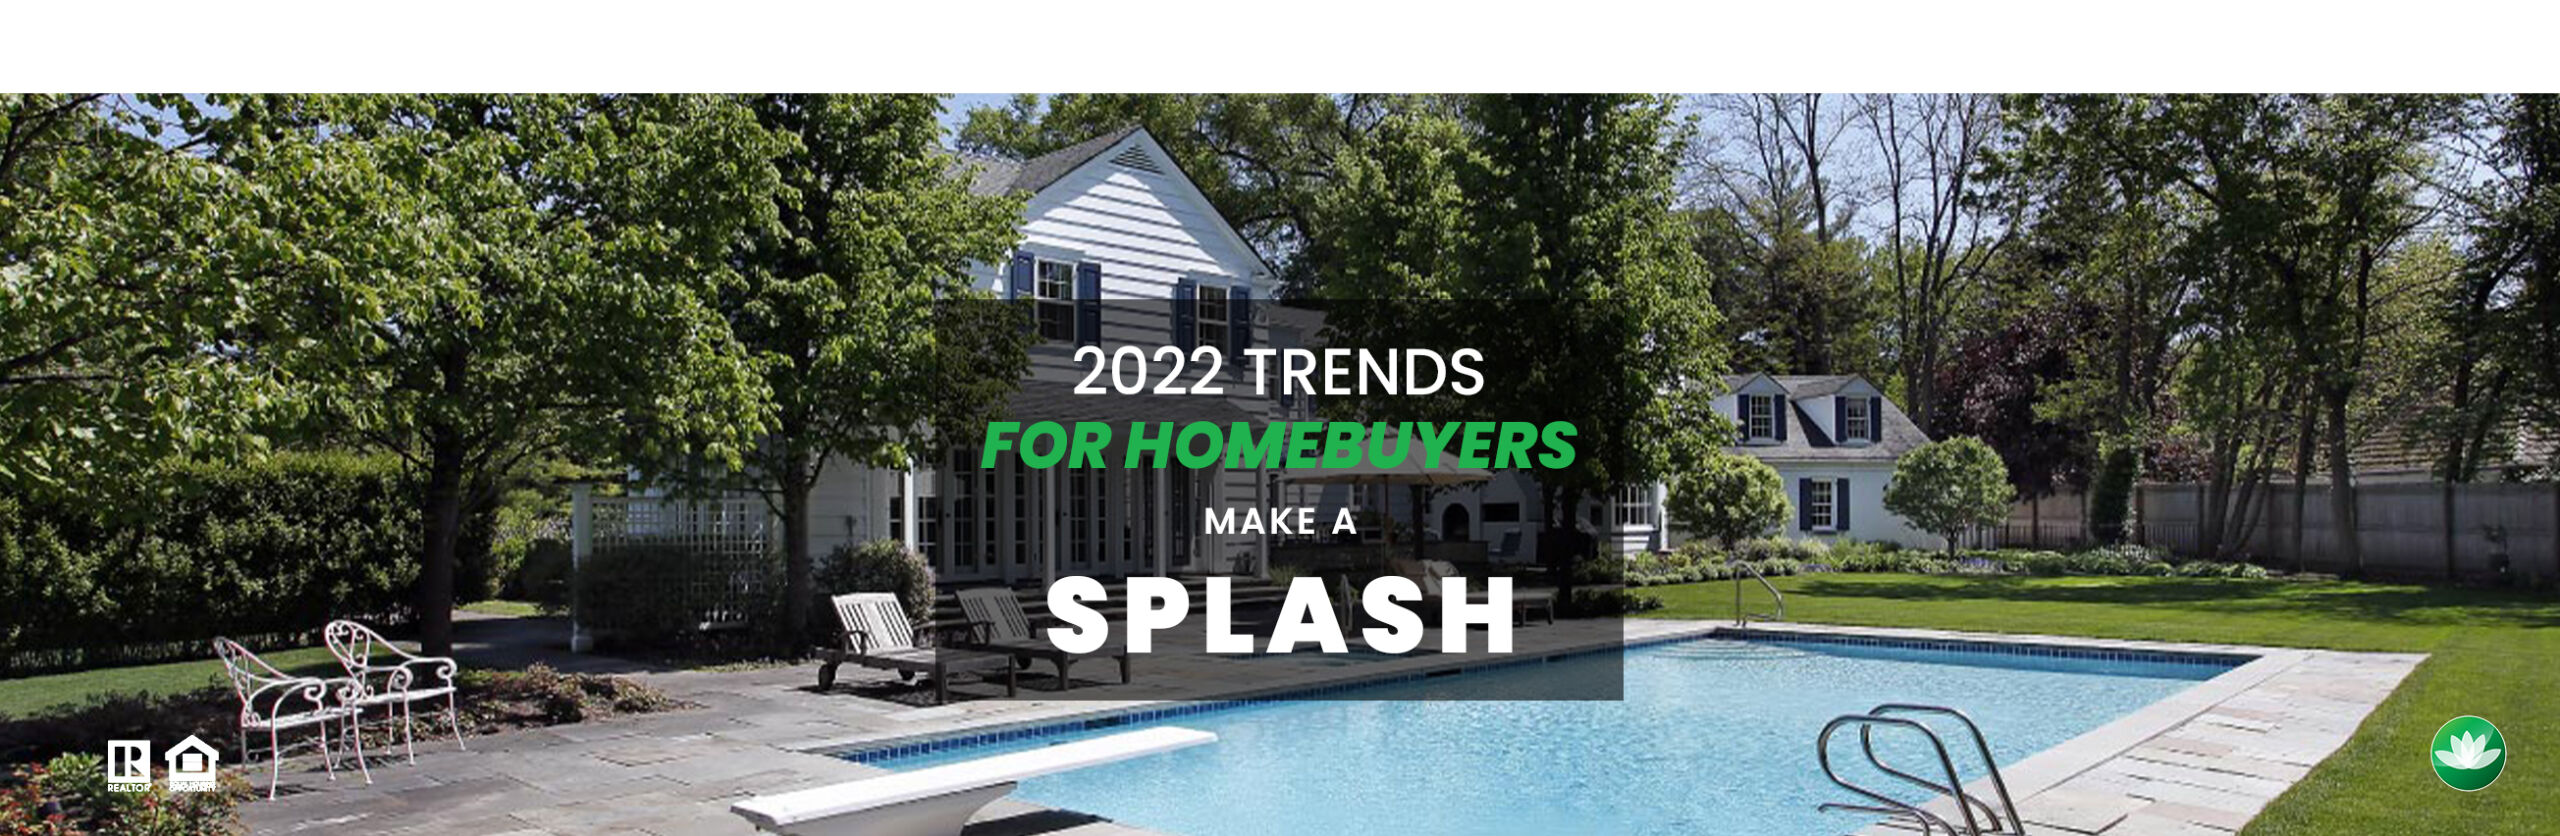 2022 Homebuyer Trends make a Splash